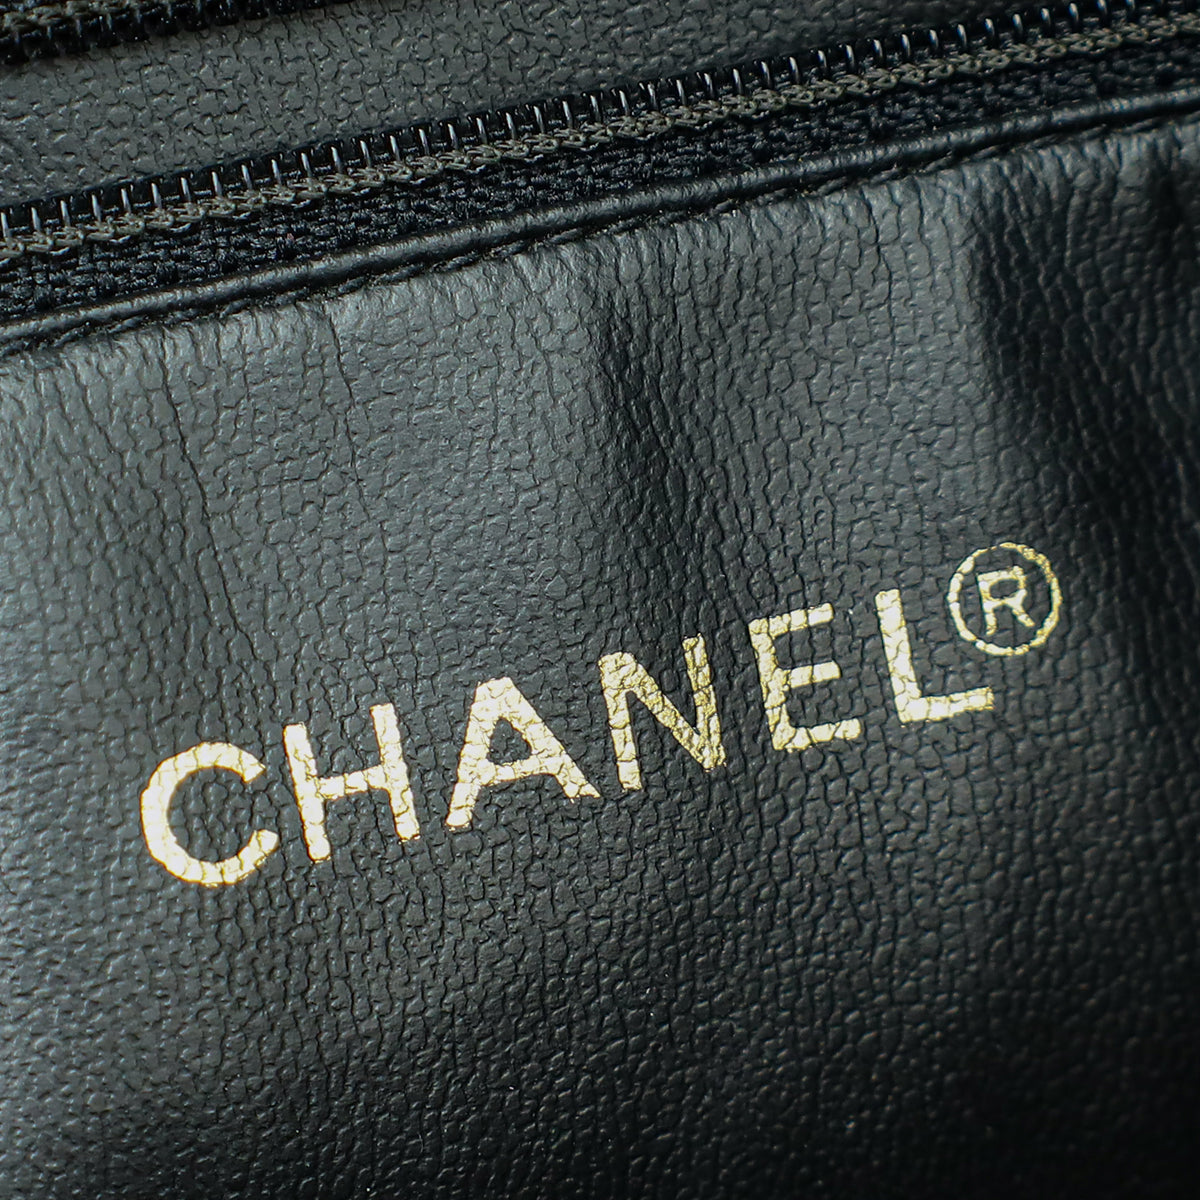 Chanel Black CC Triple Coco Tote Bag